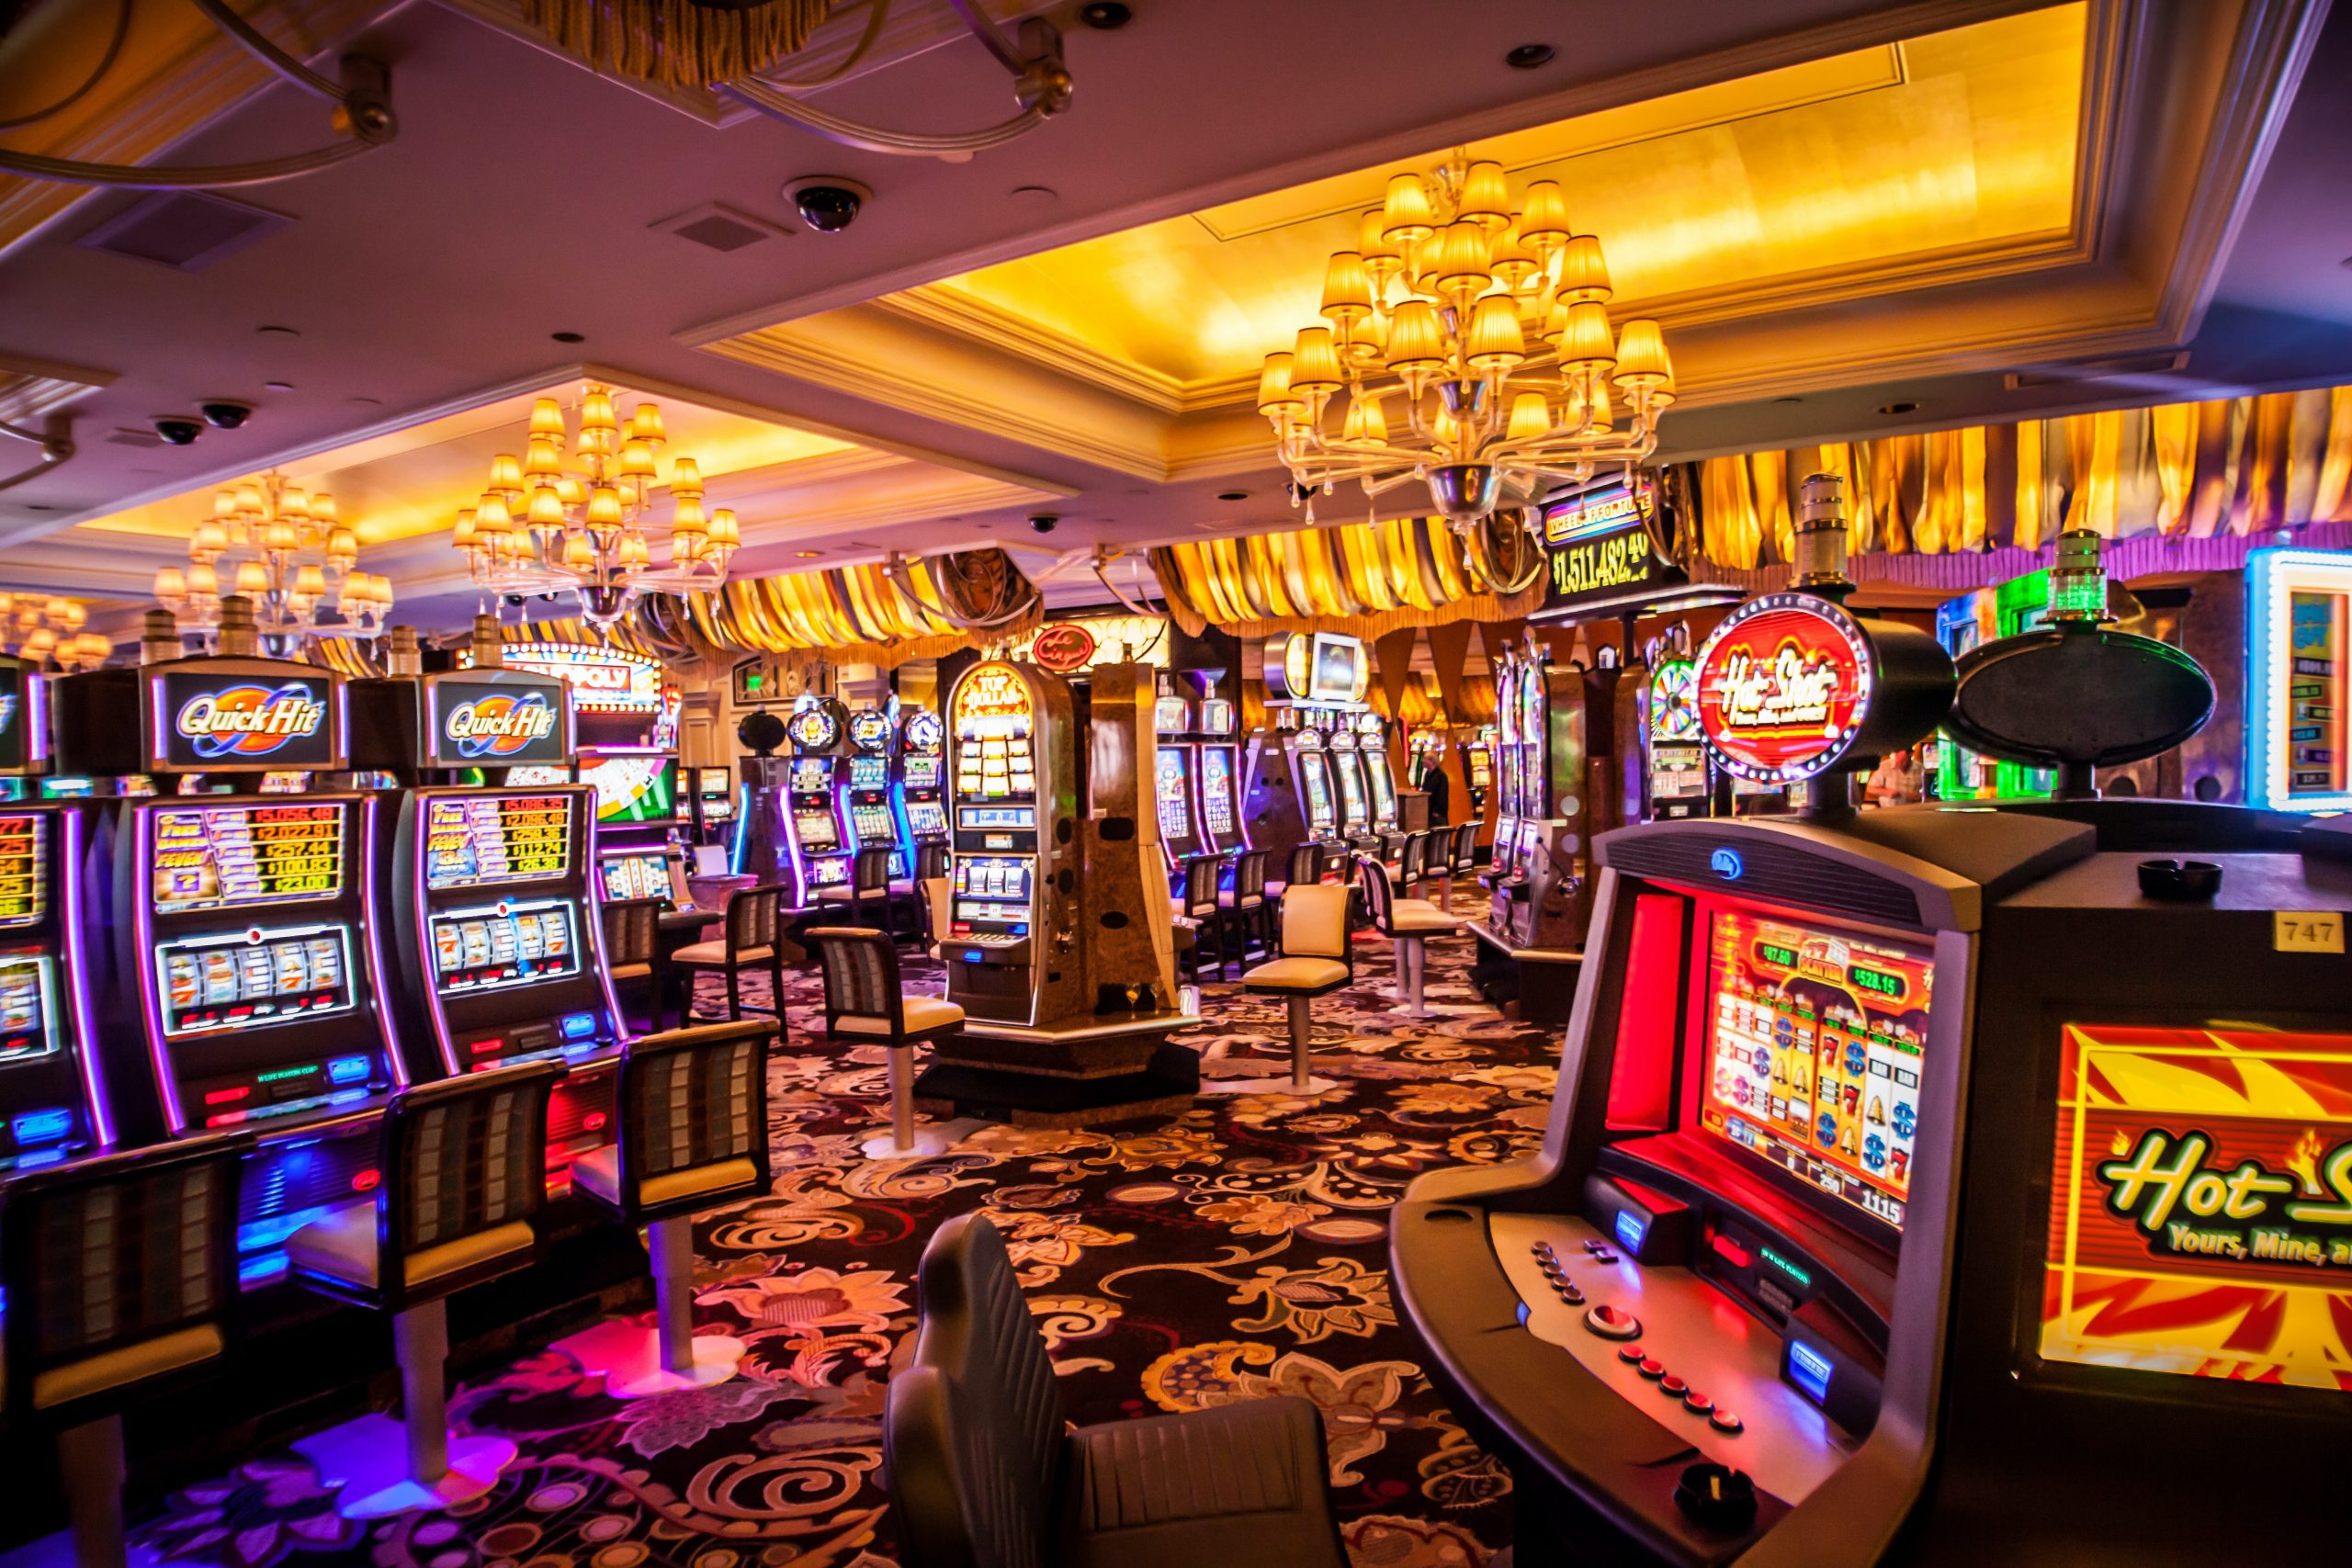 Legislative changes in the gambling business